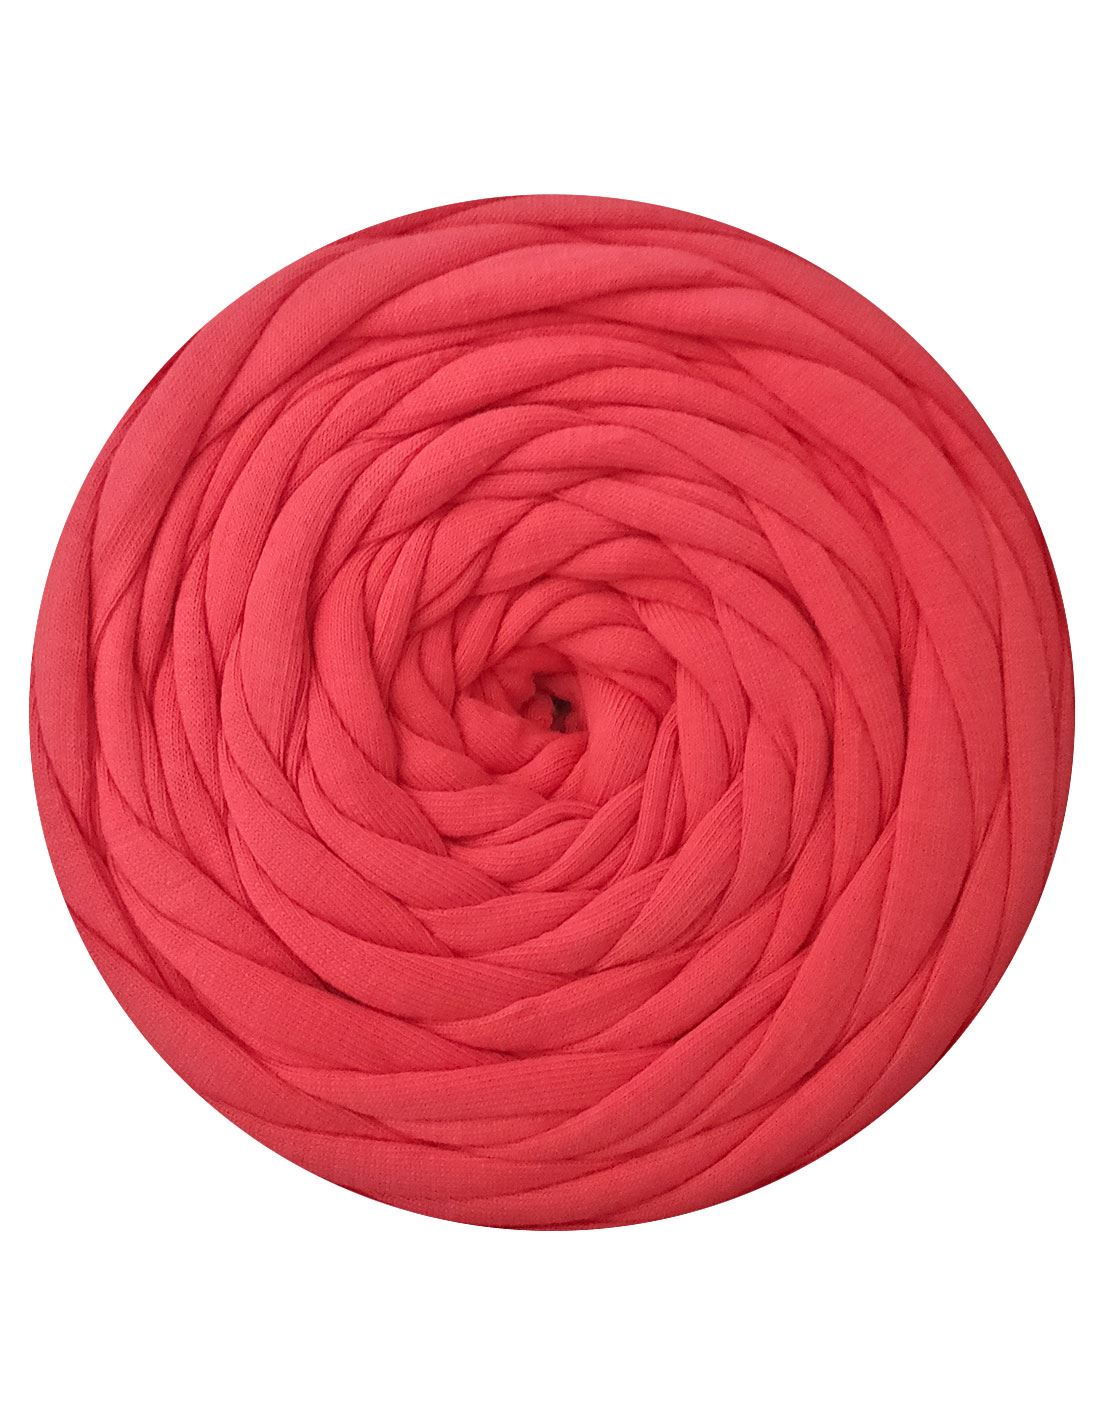 Bright punch pink t-shirt yarn (100-120m)